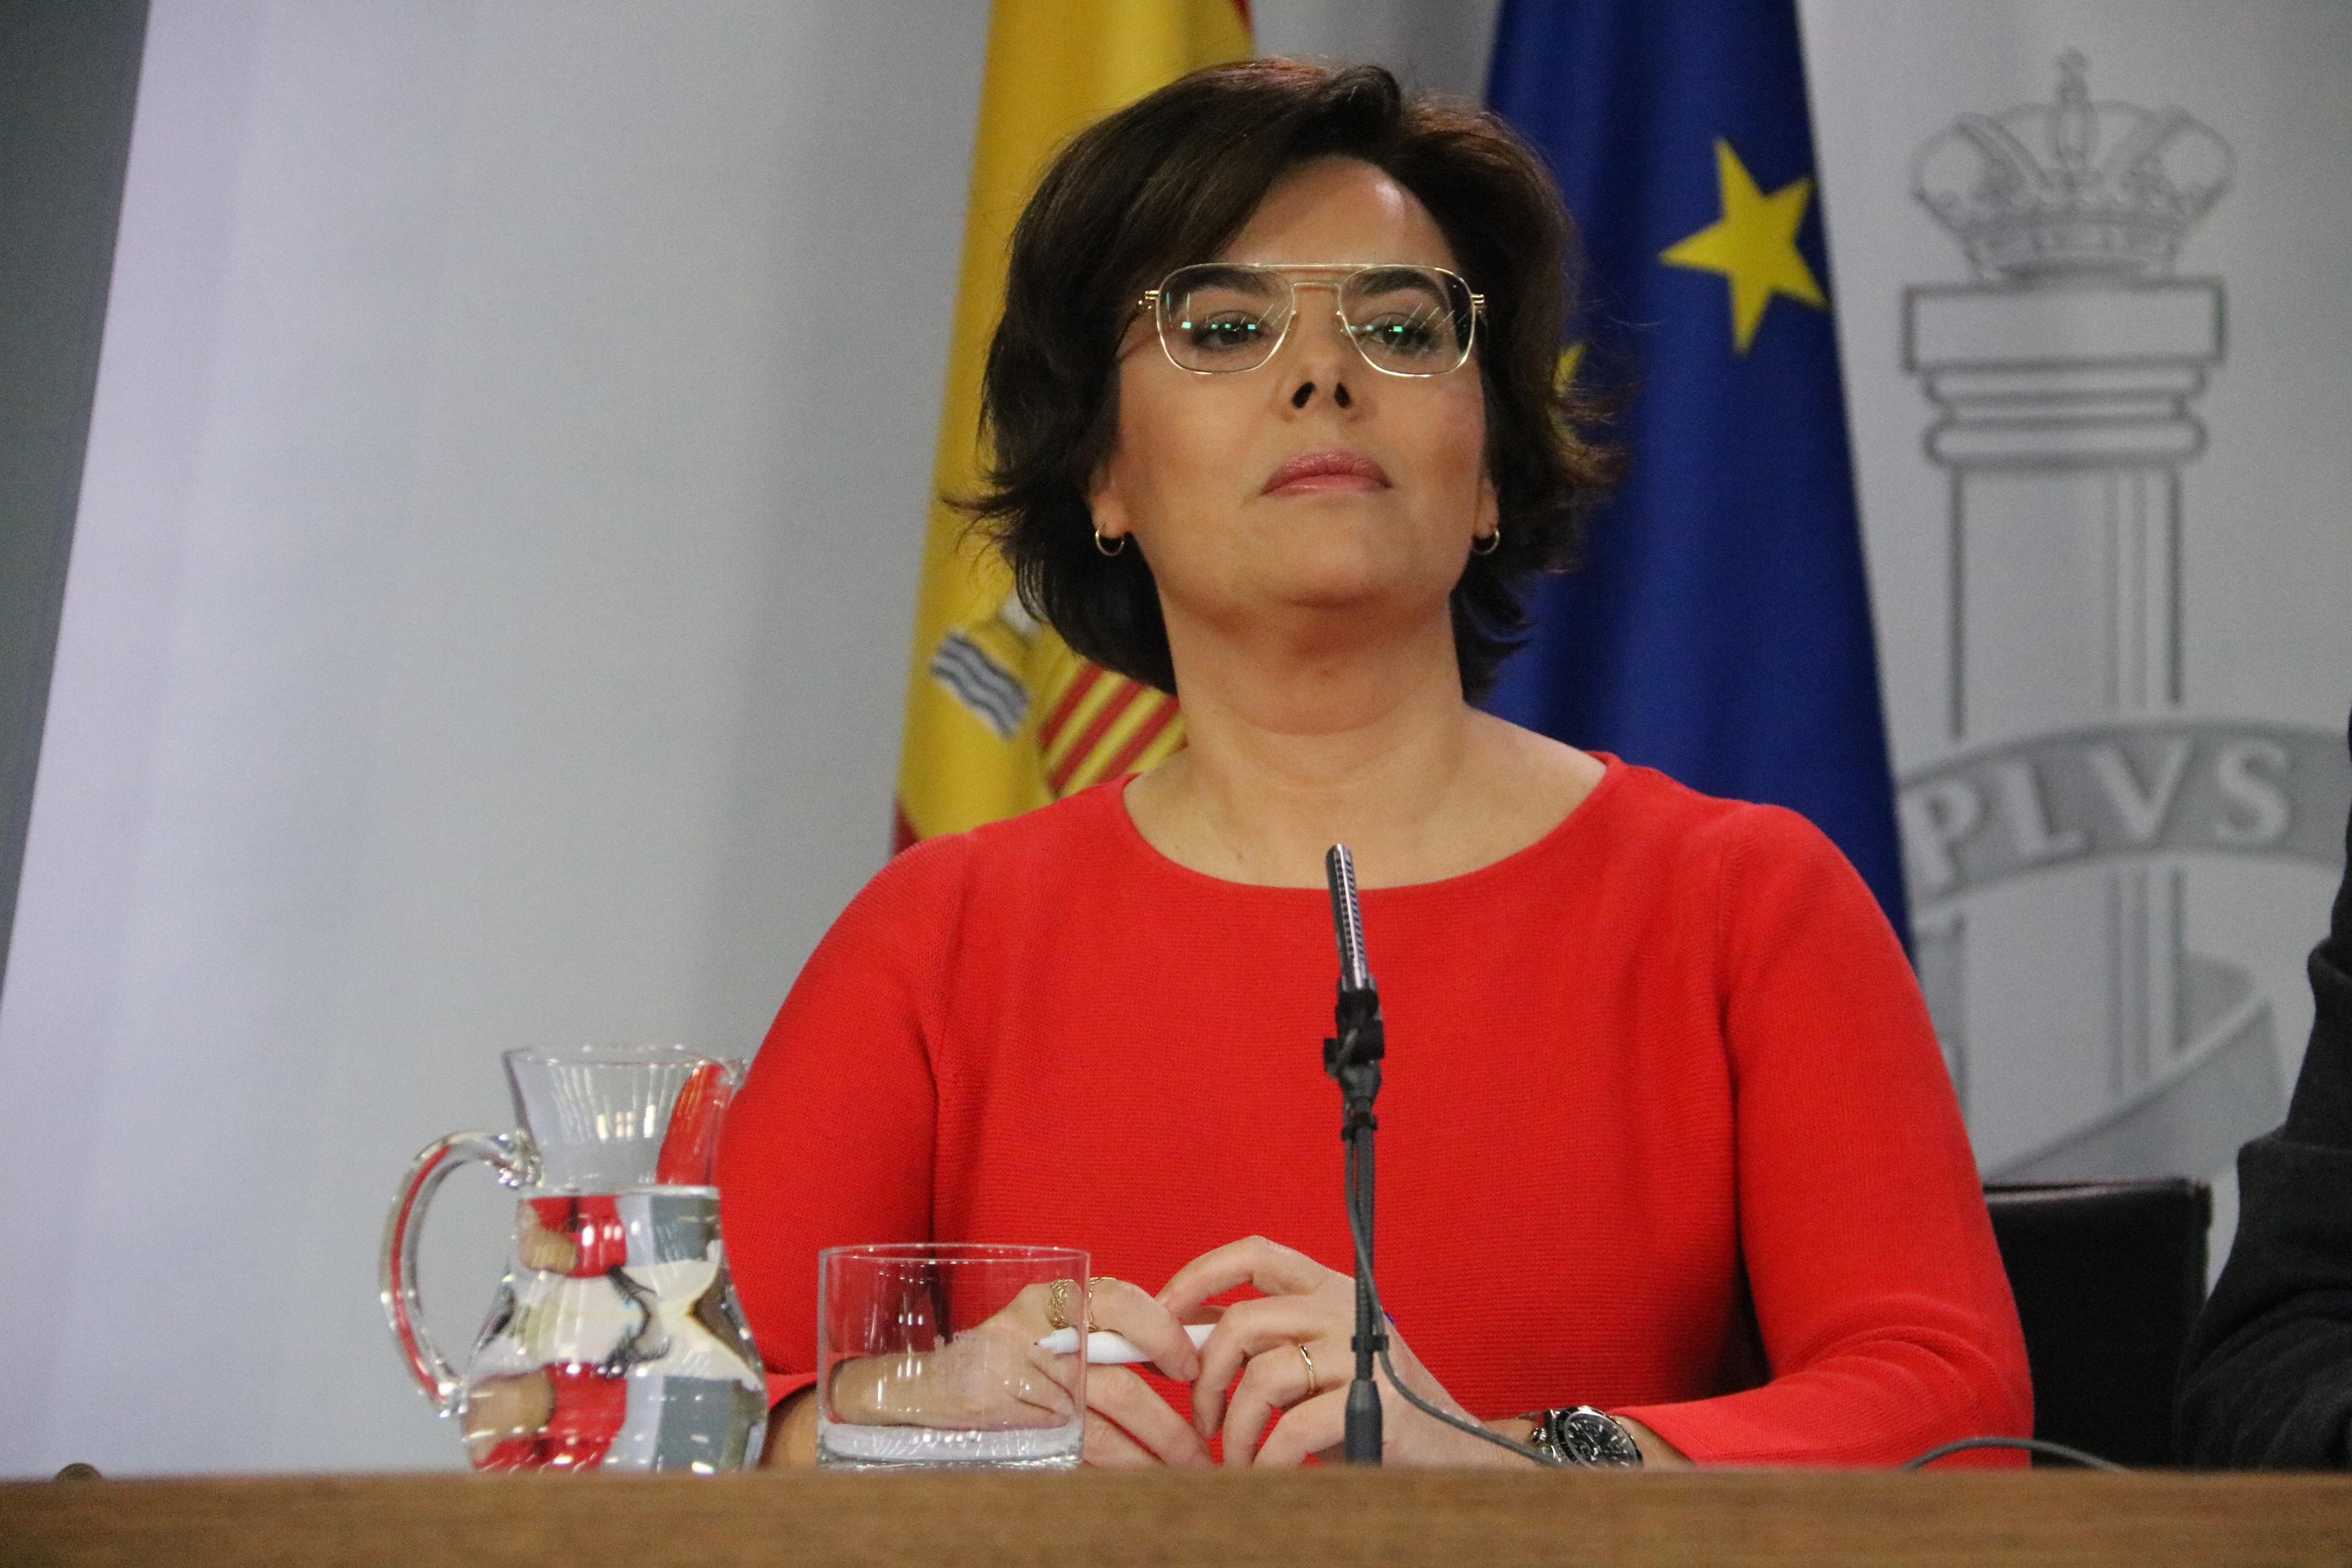 Soraya Sáenz de Santamaría on January 26 2018 (by Tània Tàpia)